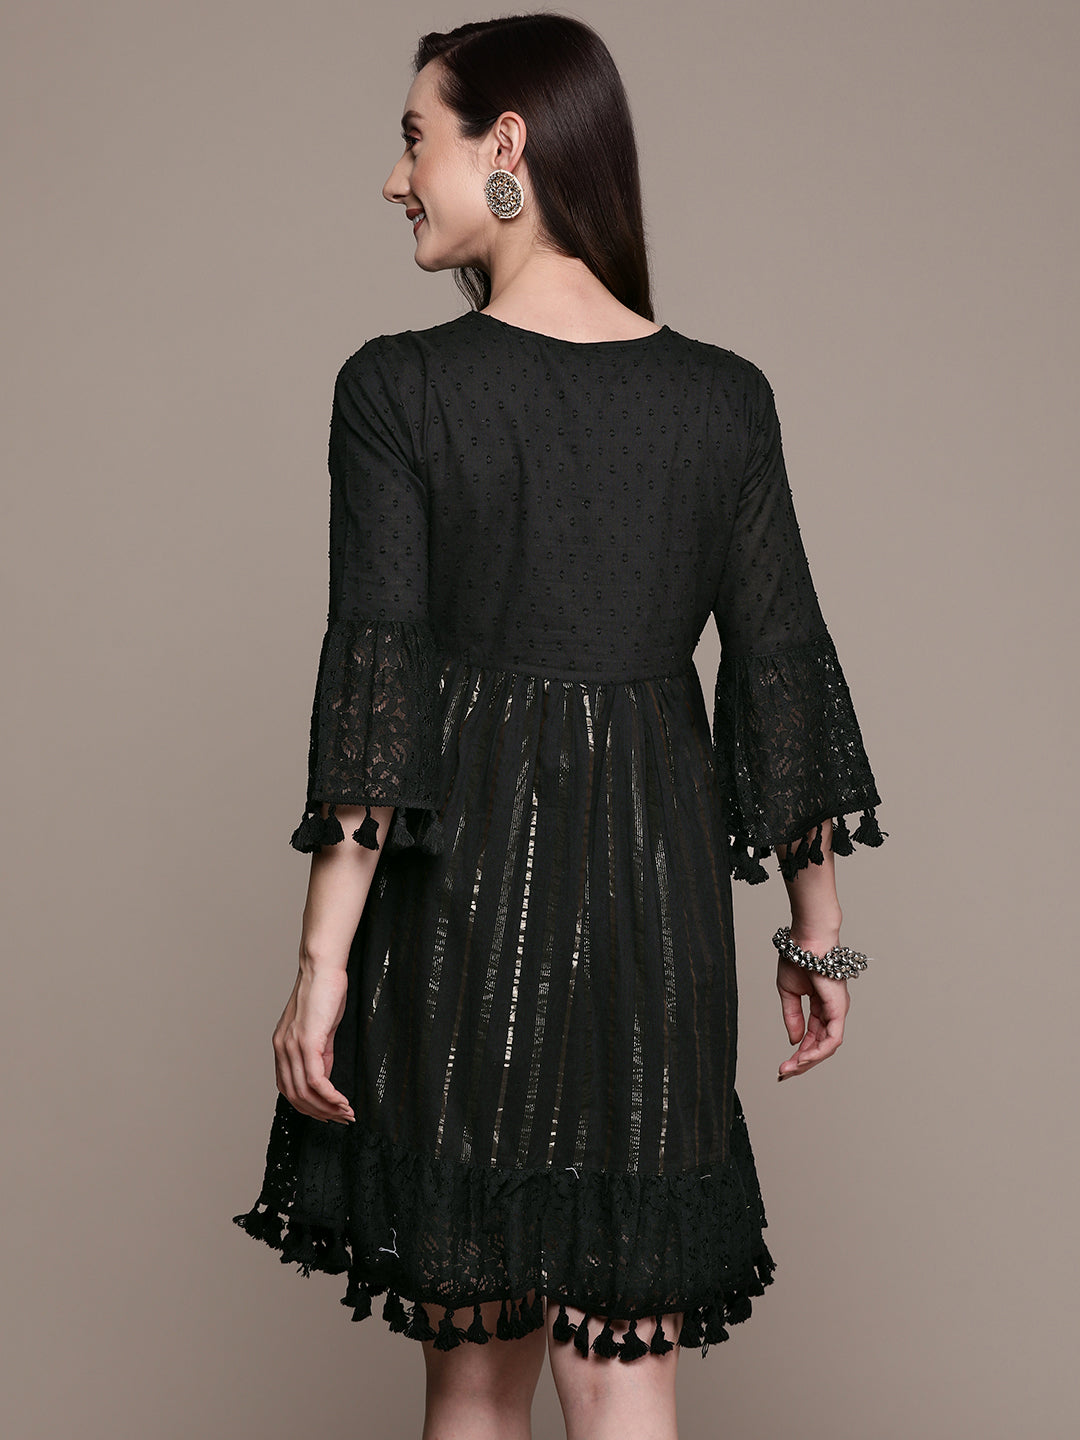 Ishin Women's Black Lurex Embellished A-Line Dress